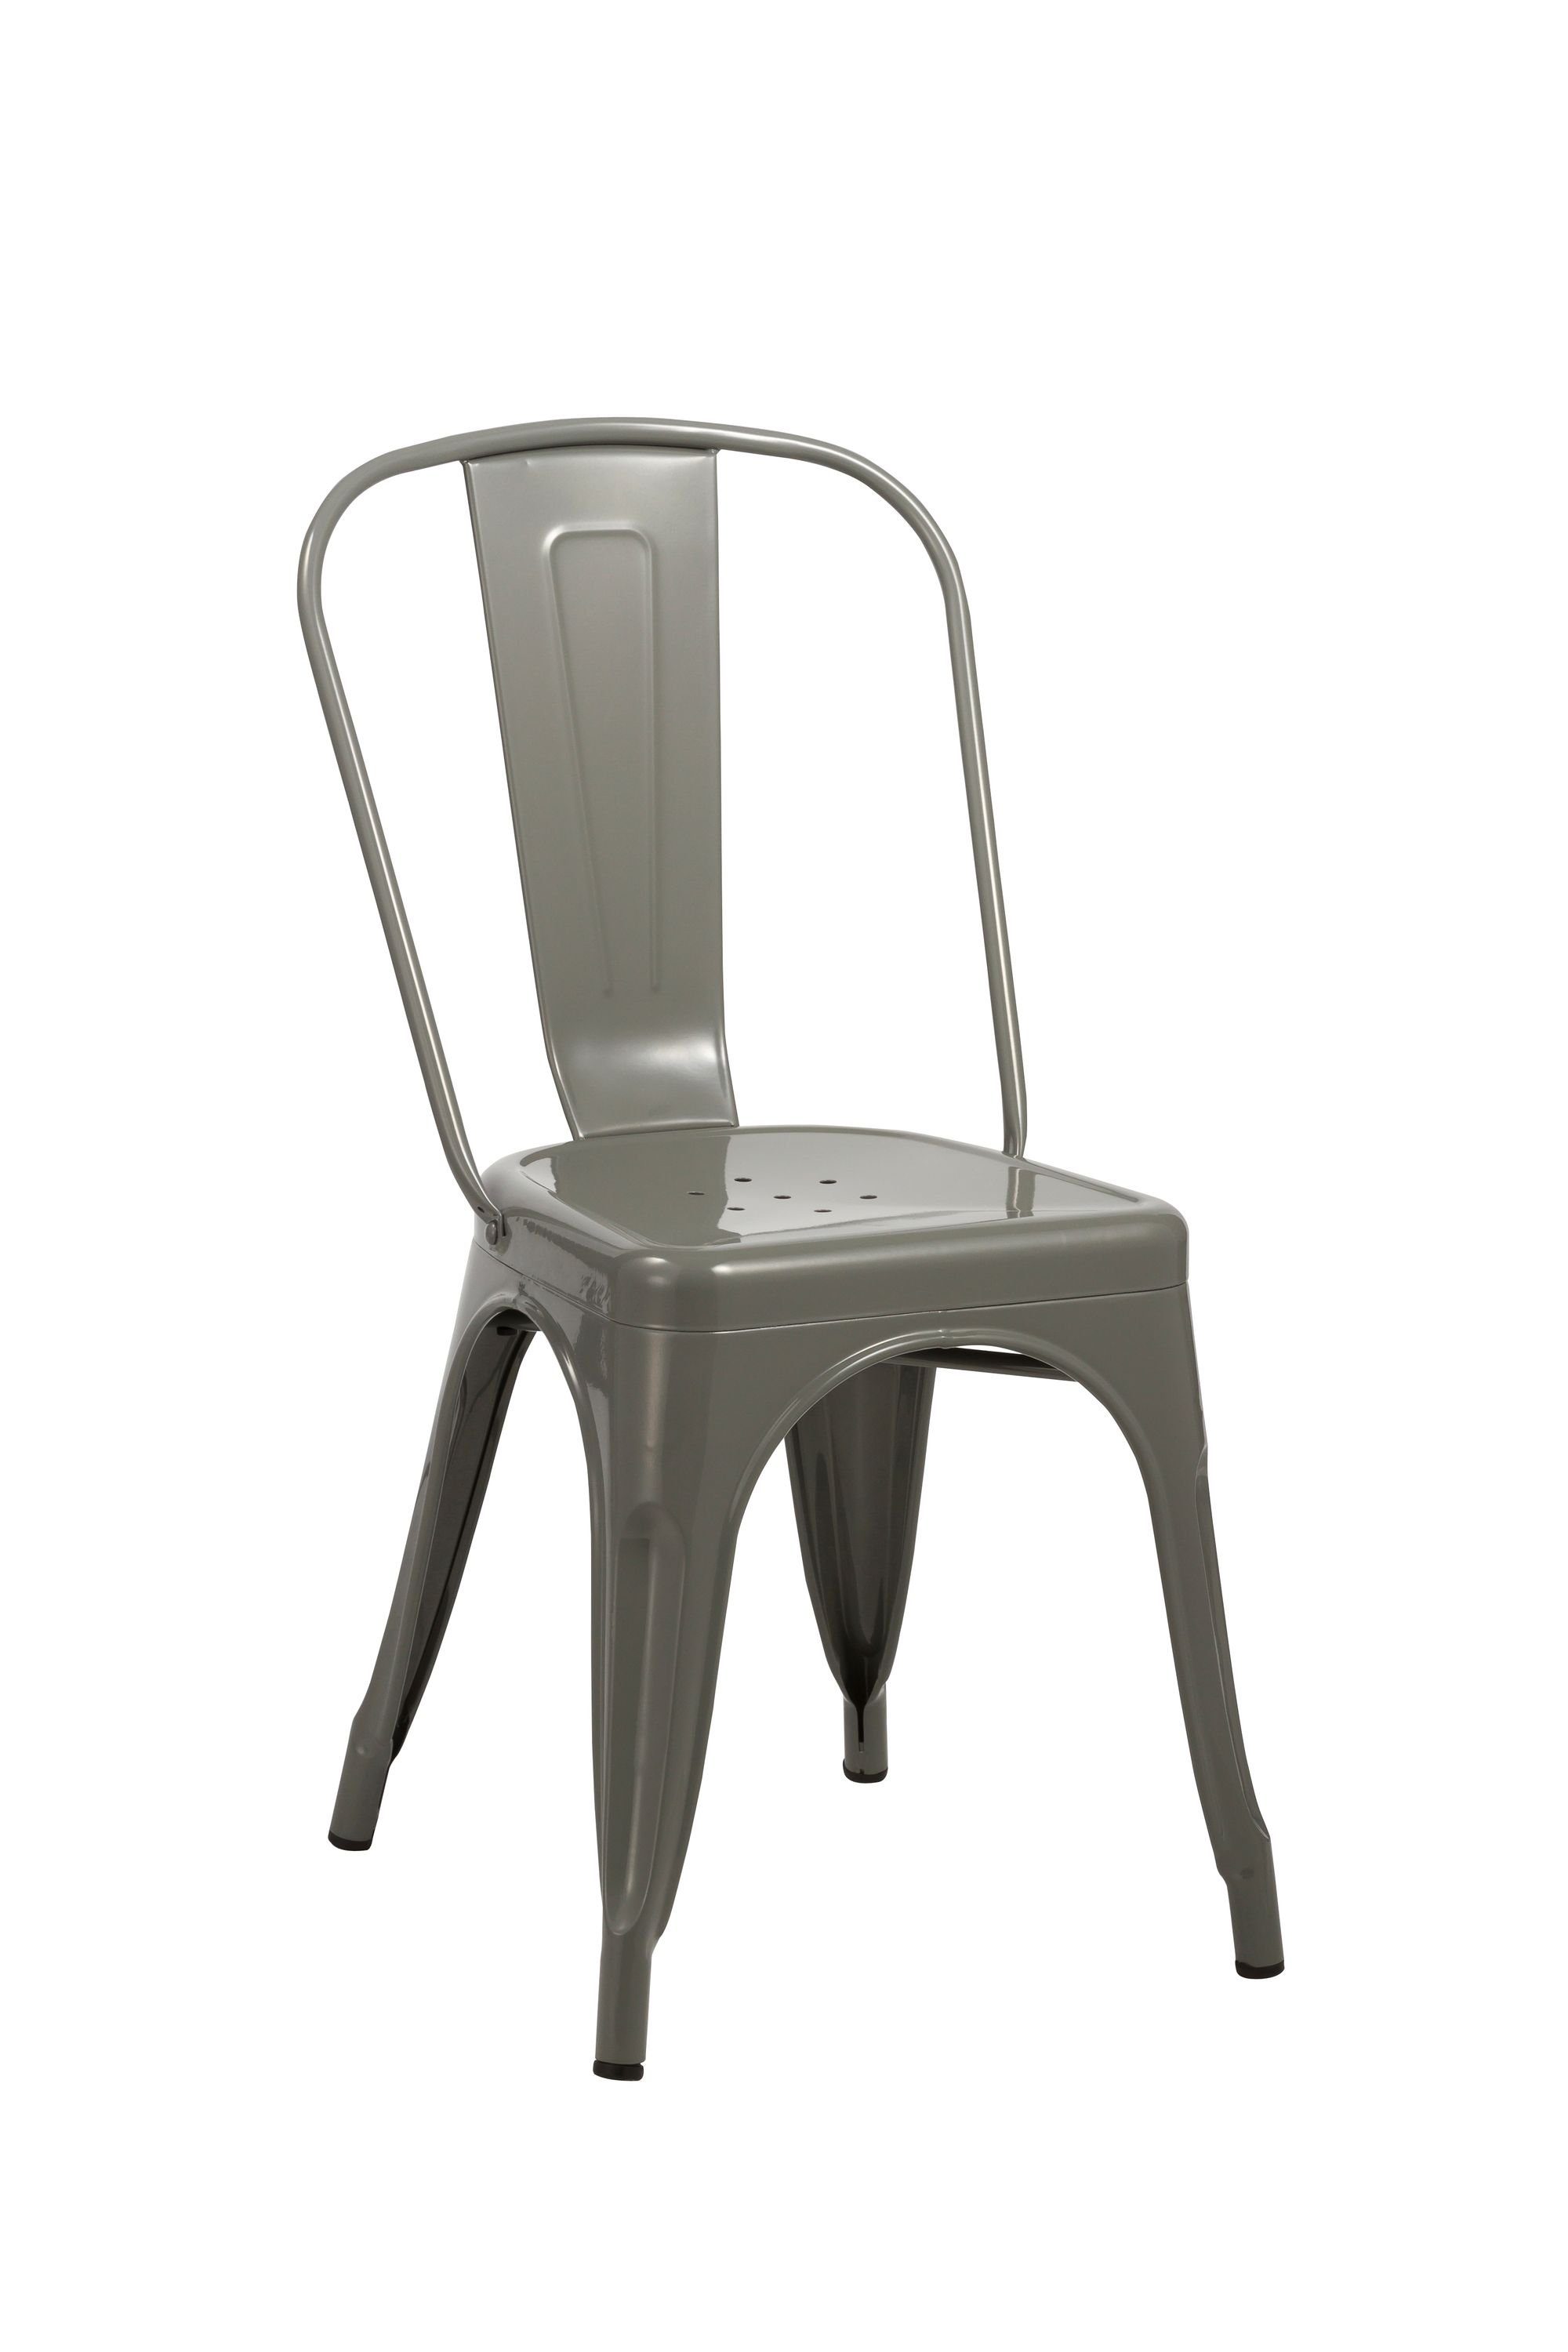 Duhome Grau stapelbar aus Holz Sitzfläche METALL aus Esszimmerstuhl Stuhl Küchenstuhl Esszimmerstuhl,